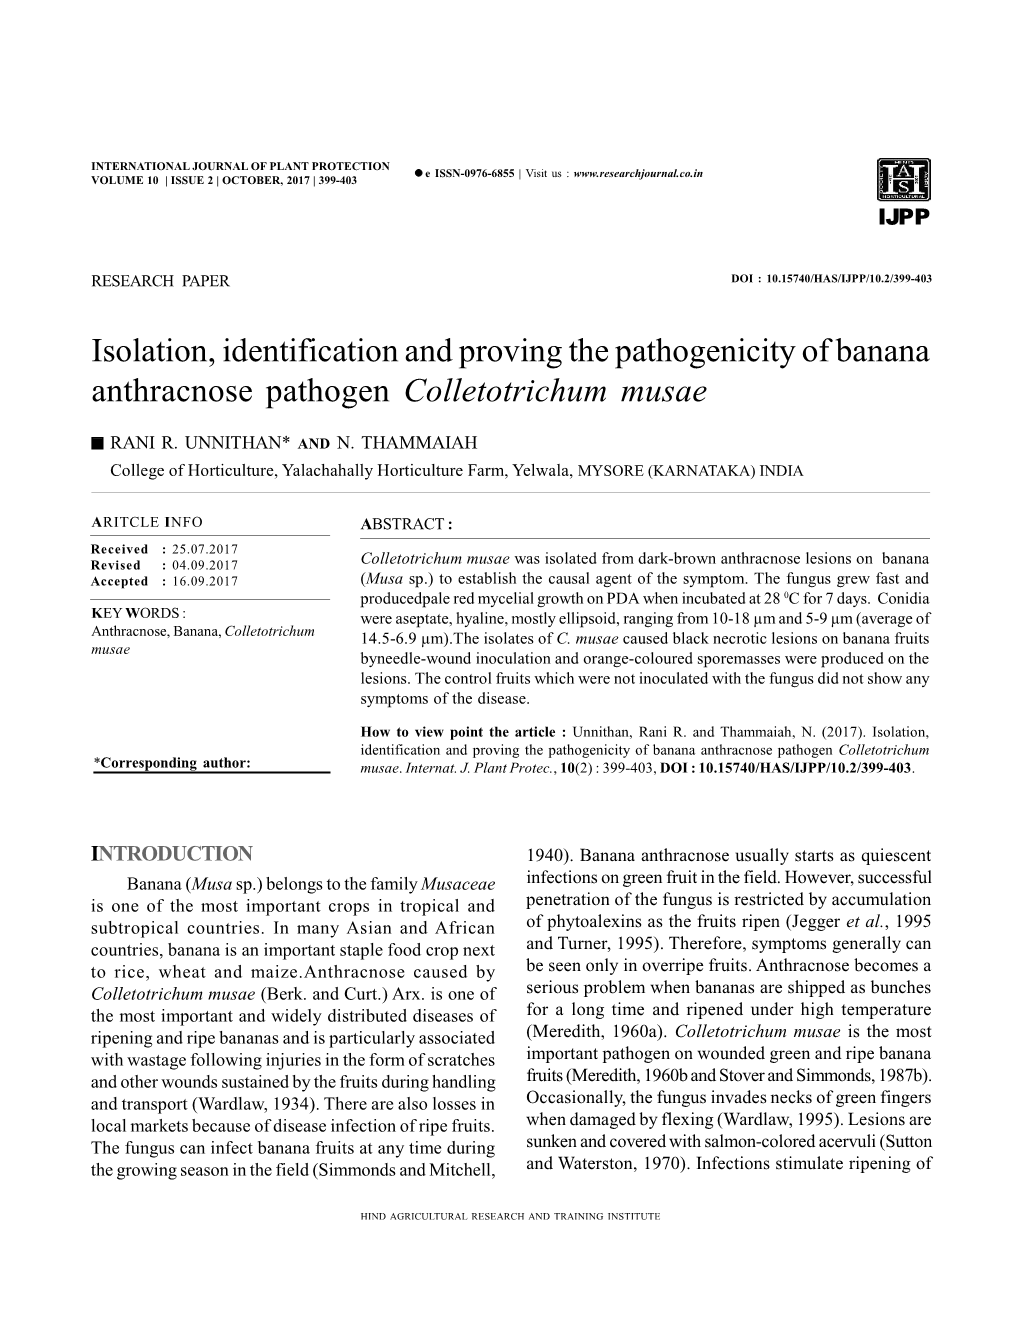 Isolation, Identification and Proving the Pathogenicity of Banana Anthracnose Pathogen Colletotrichum Musae